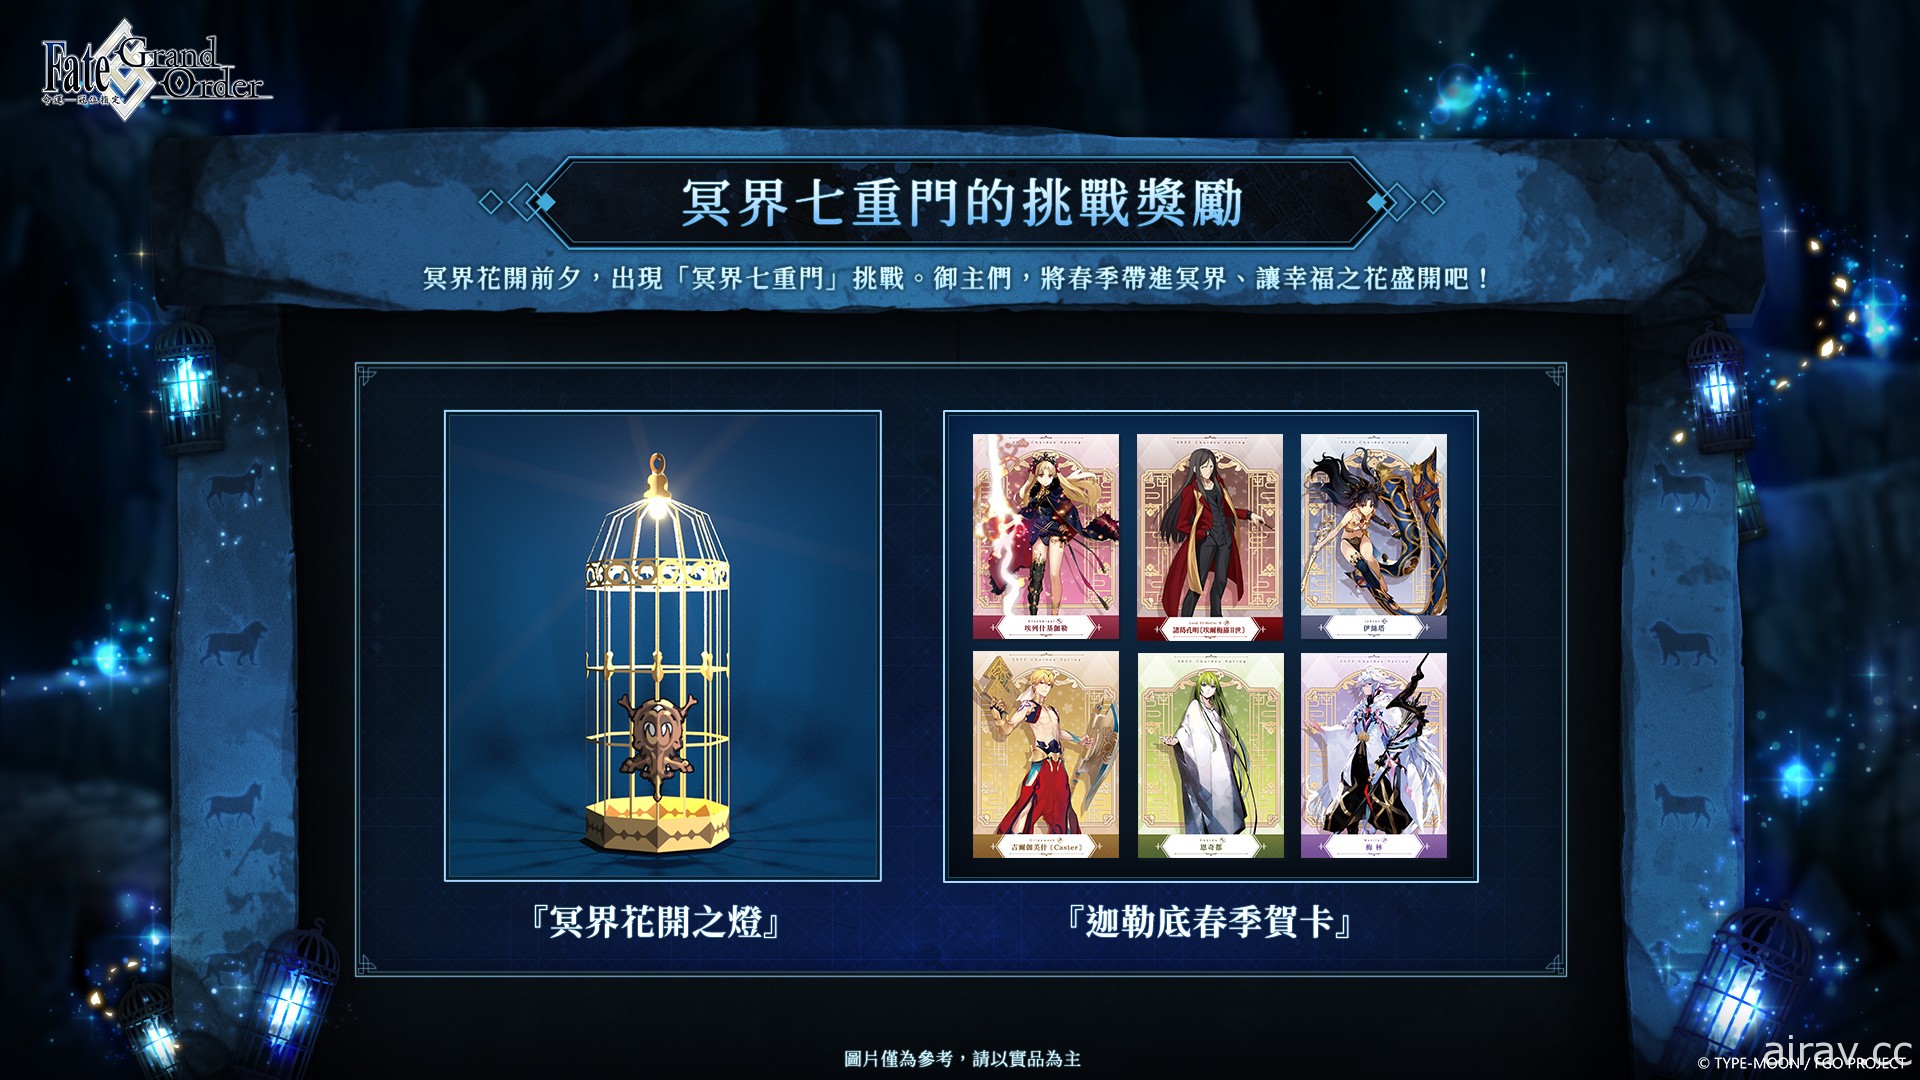 《Fate/Grand Order》繁中版舉辦「2022 迦勒底元宵燈祭」活動